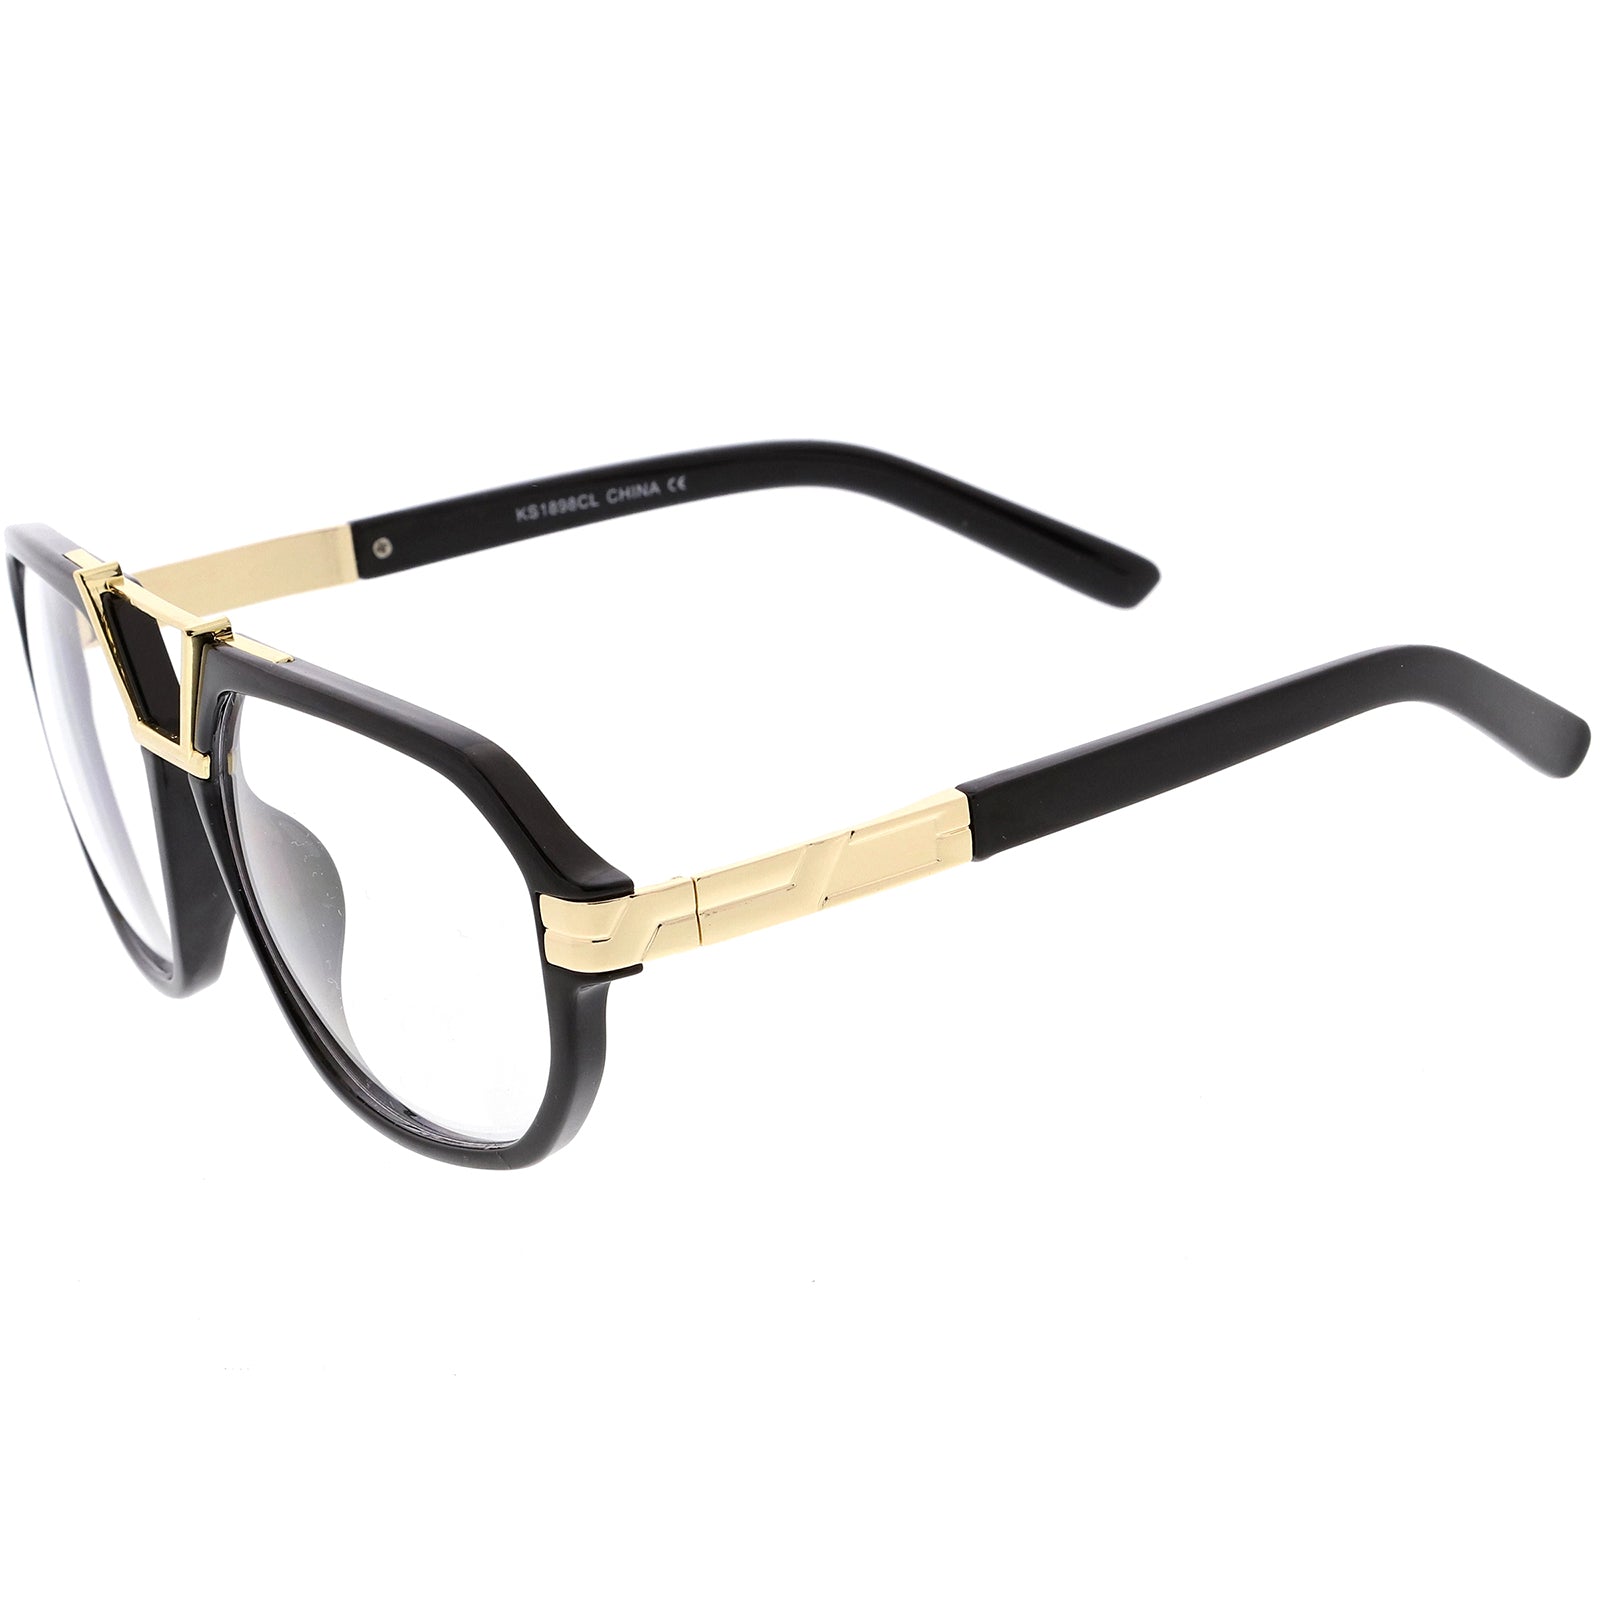 Large Gold Frame Clear Lens Aviators Glasses Wholesale